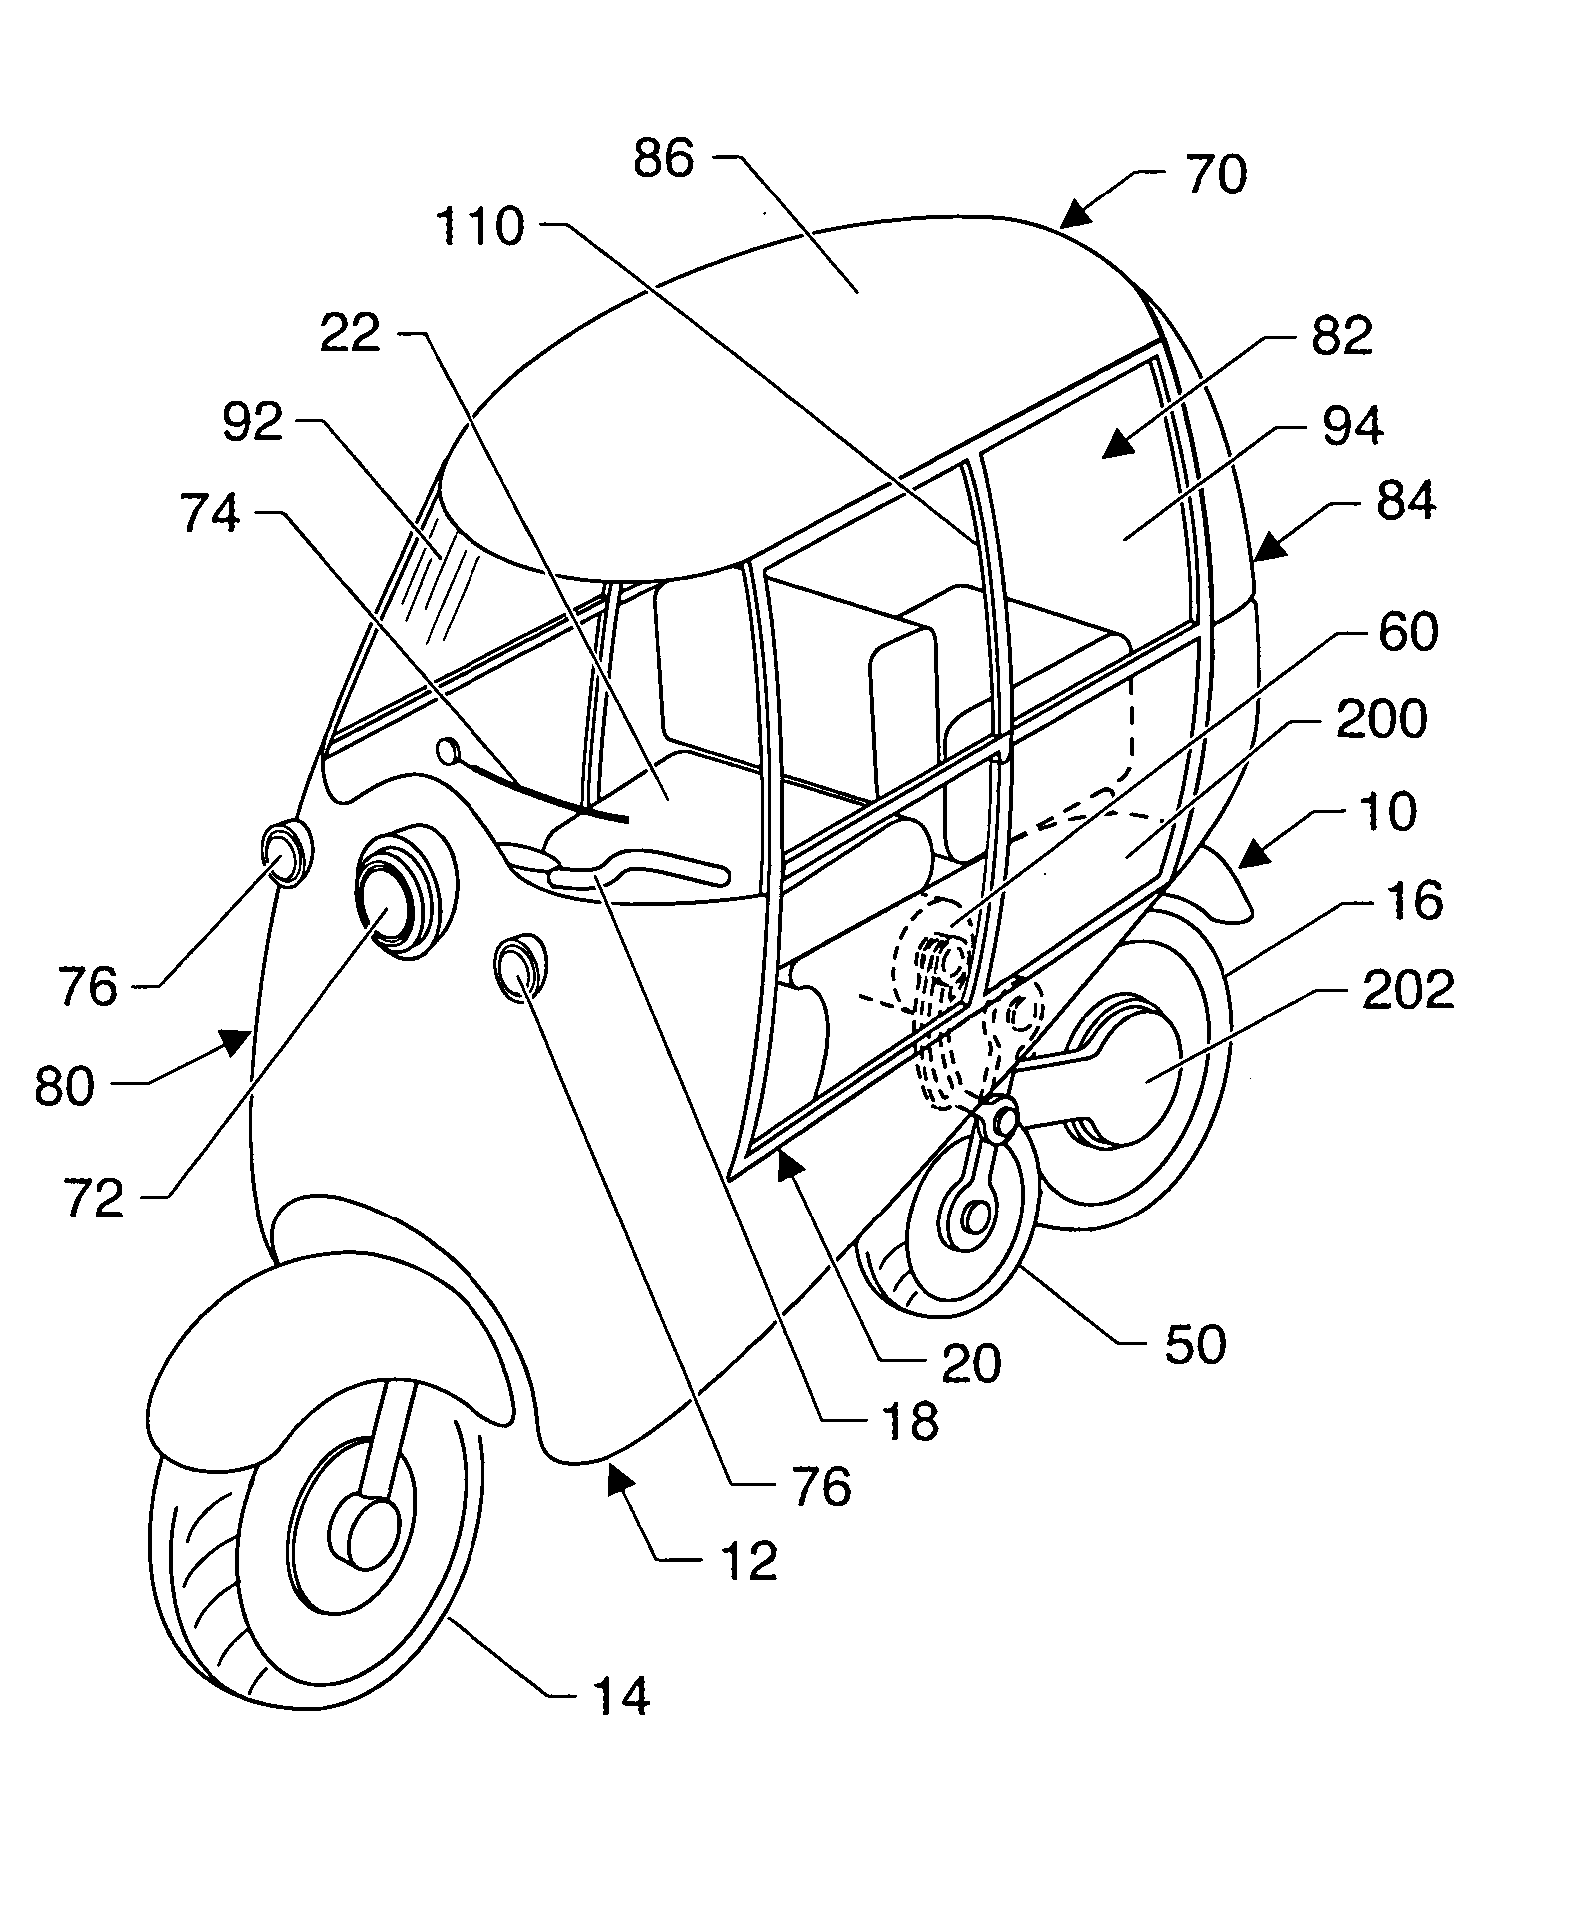 Vehicle of novel configuration and operation